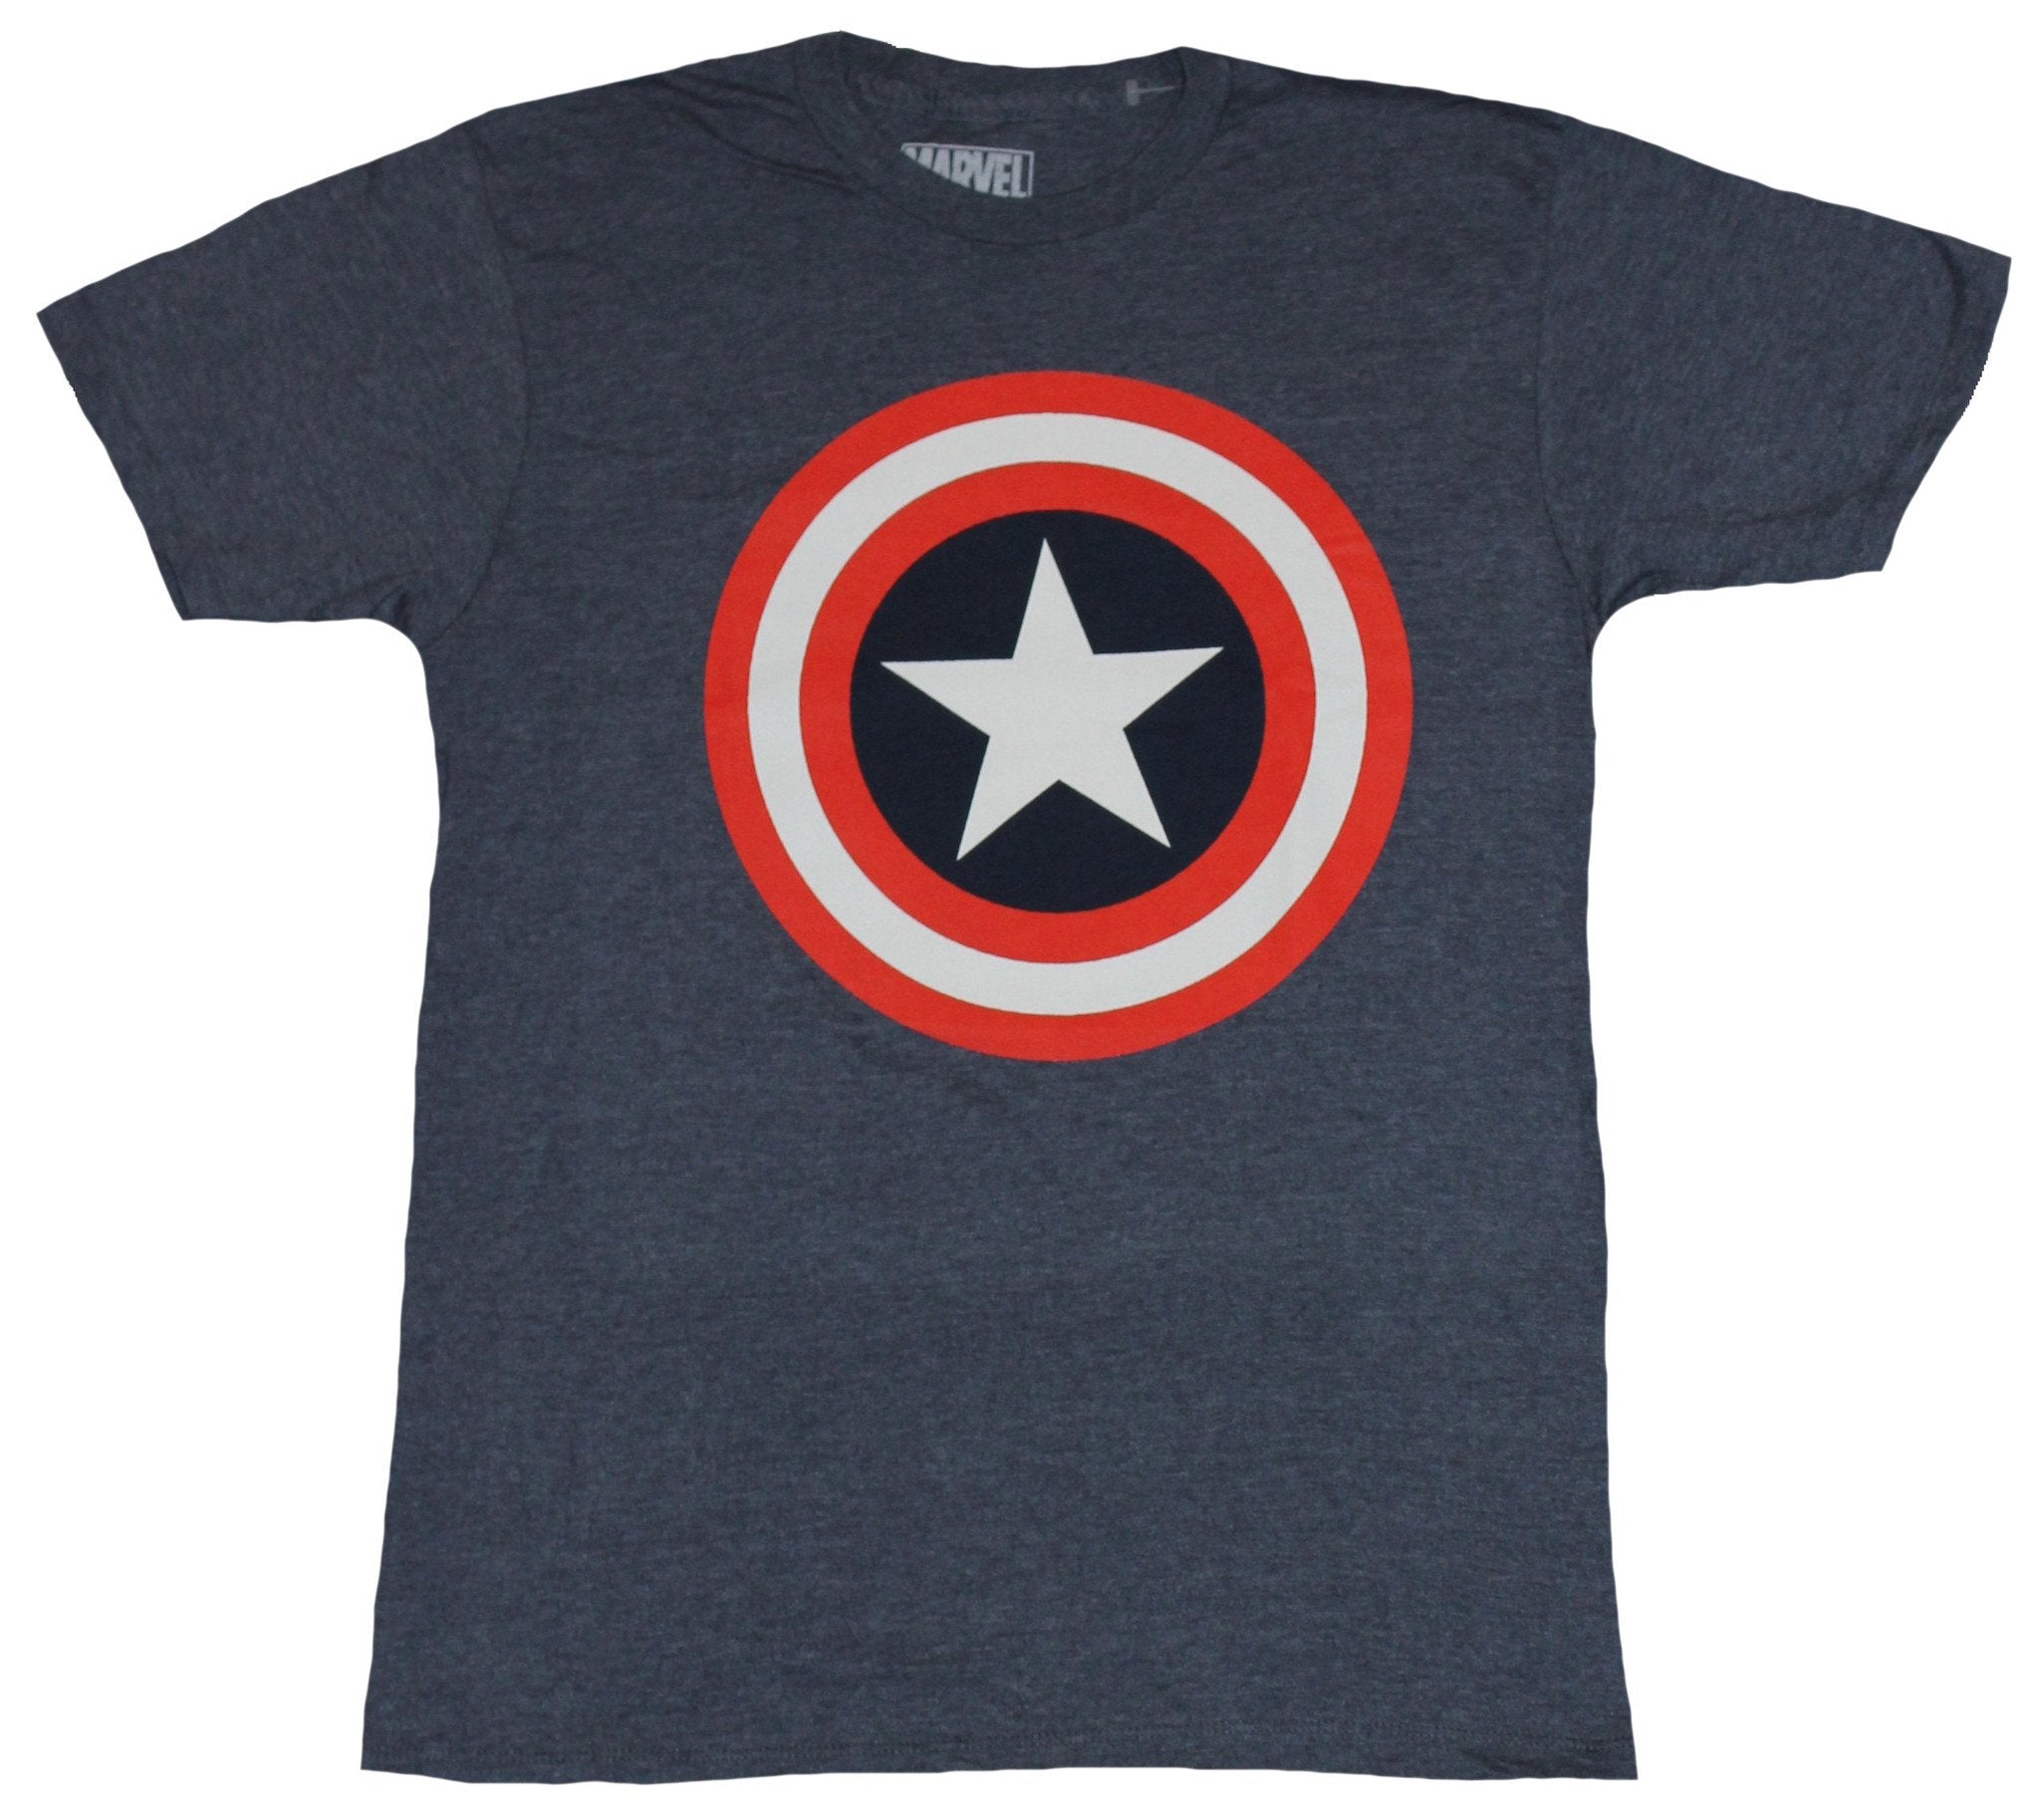 Captain America (Marvel Comics) Mens T-Shirt - Unblemished Red White Blue Logo